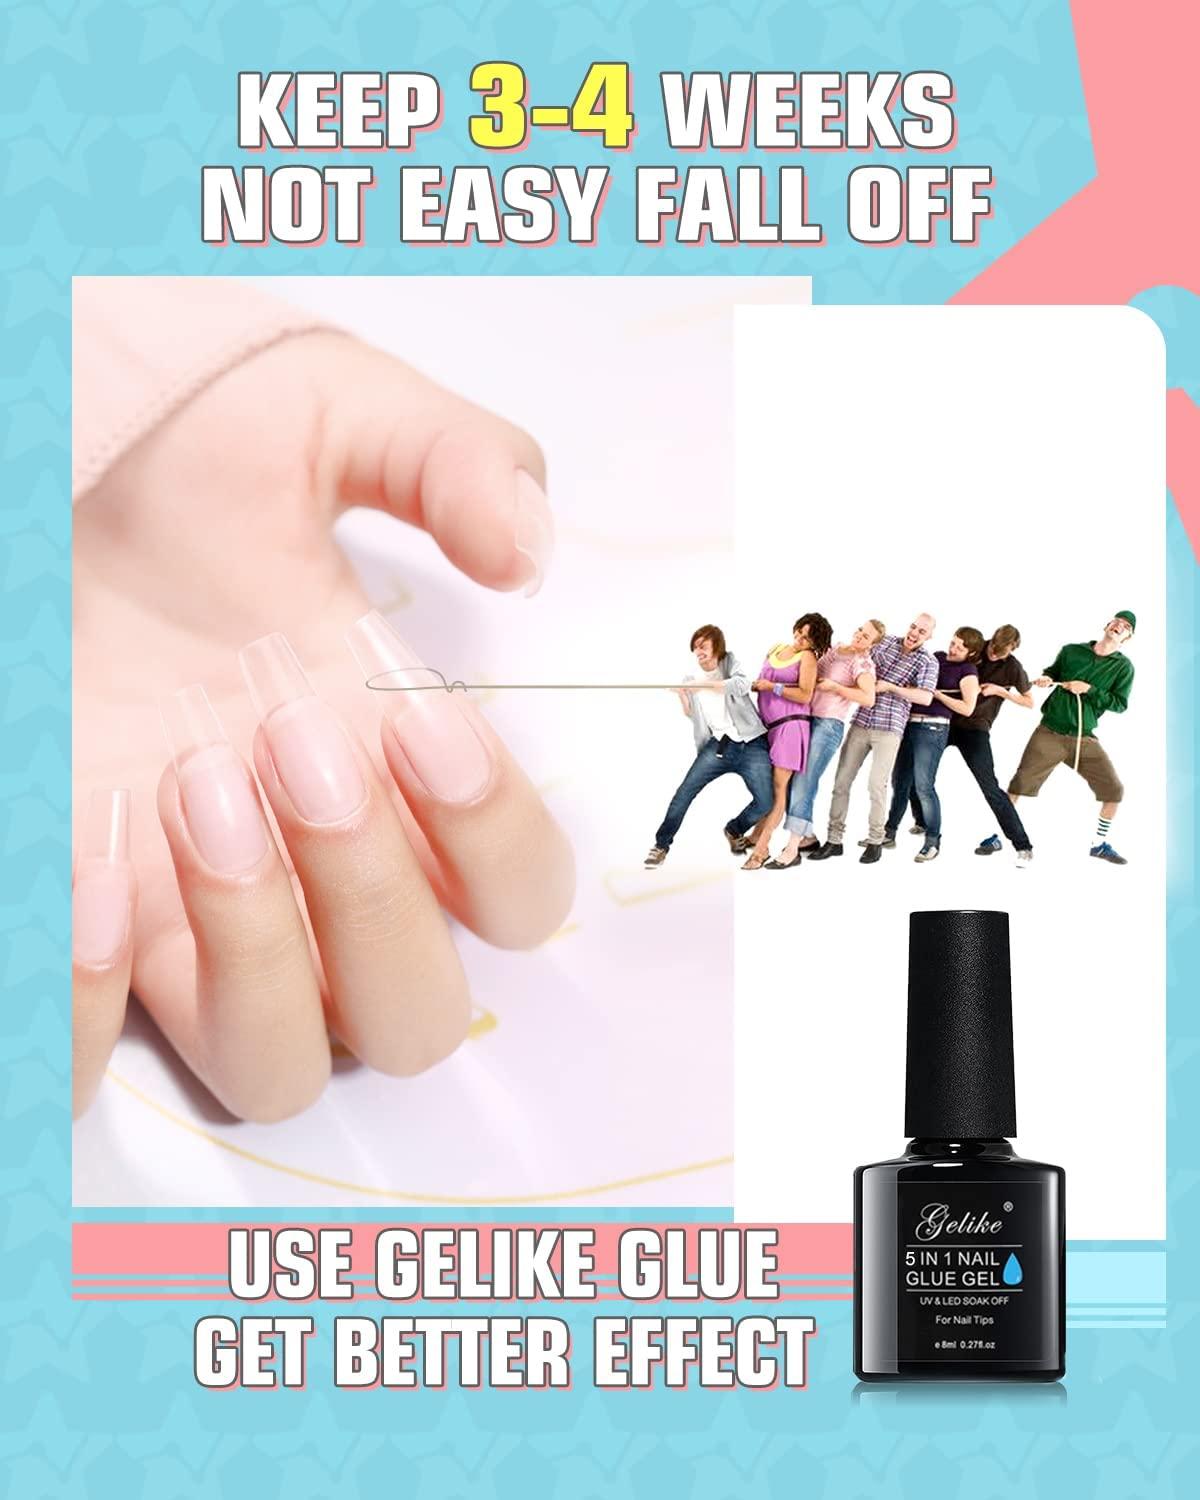 Gelike EC Gel x Nail Kit 6 In 1 Nail Glue Gel with Soft Gel Nail